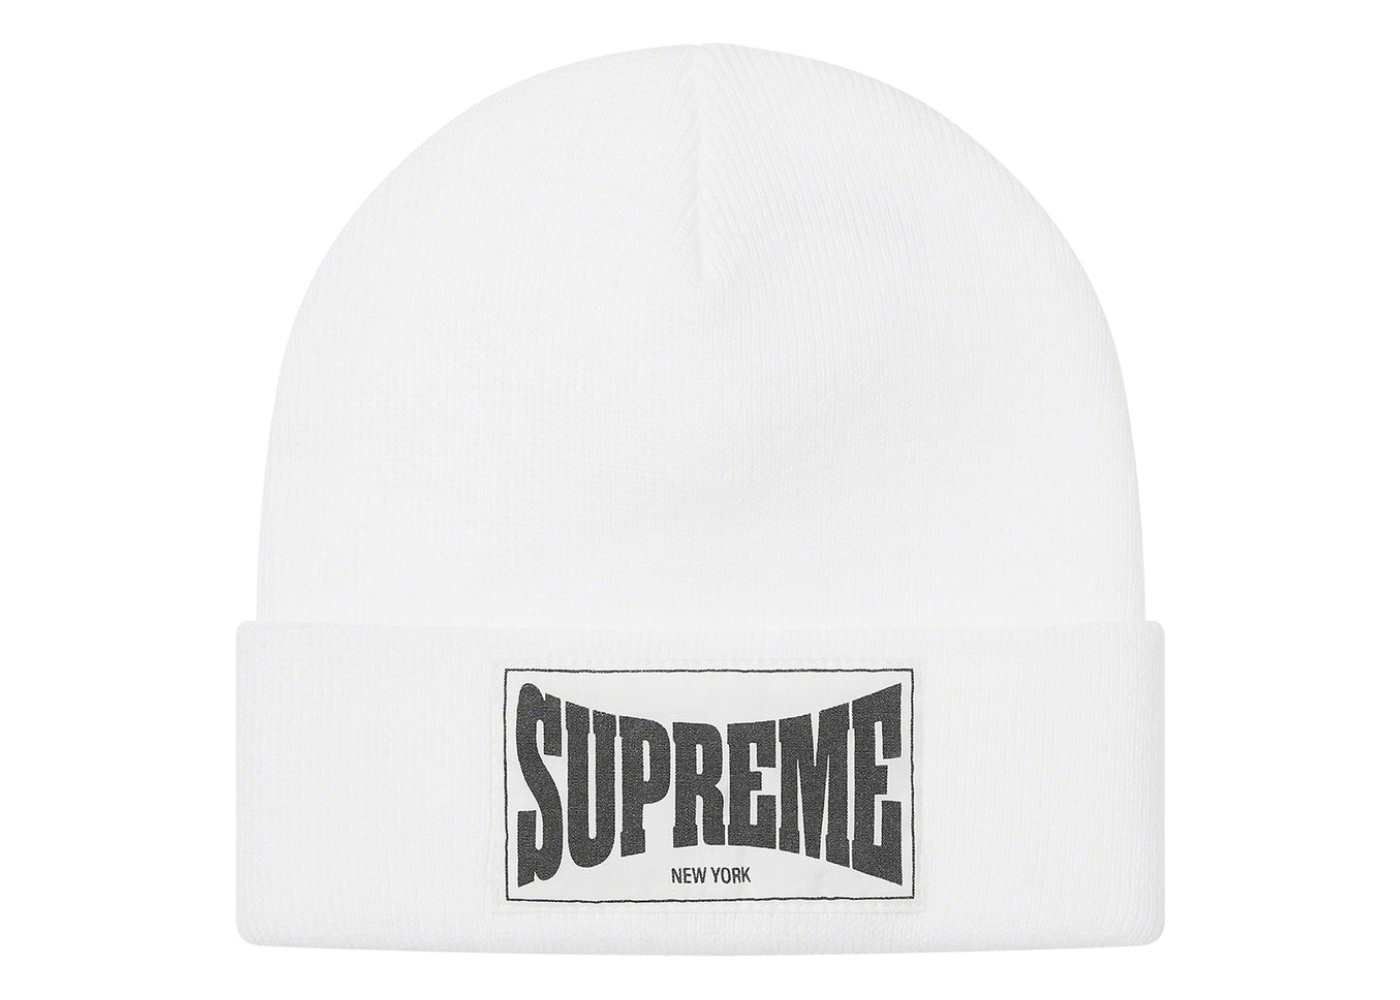 Supreme Woven Label Beanie White